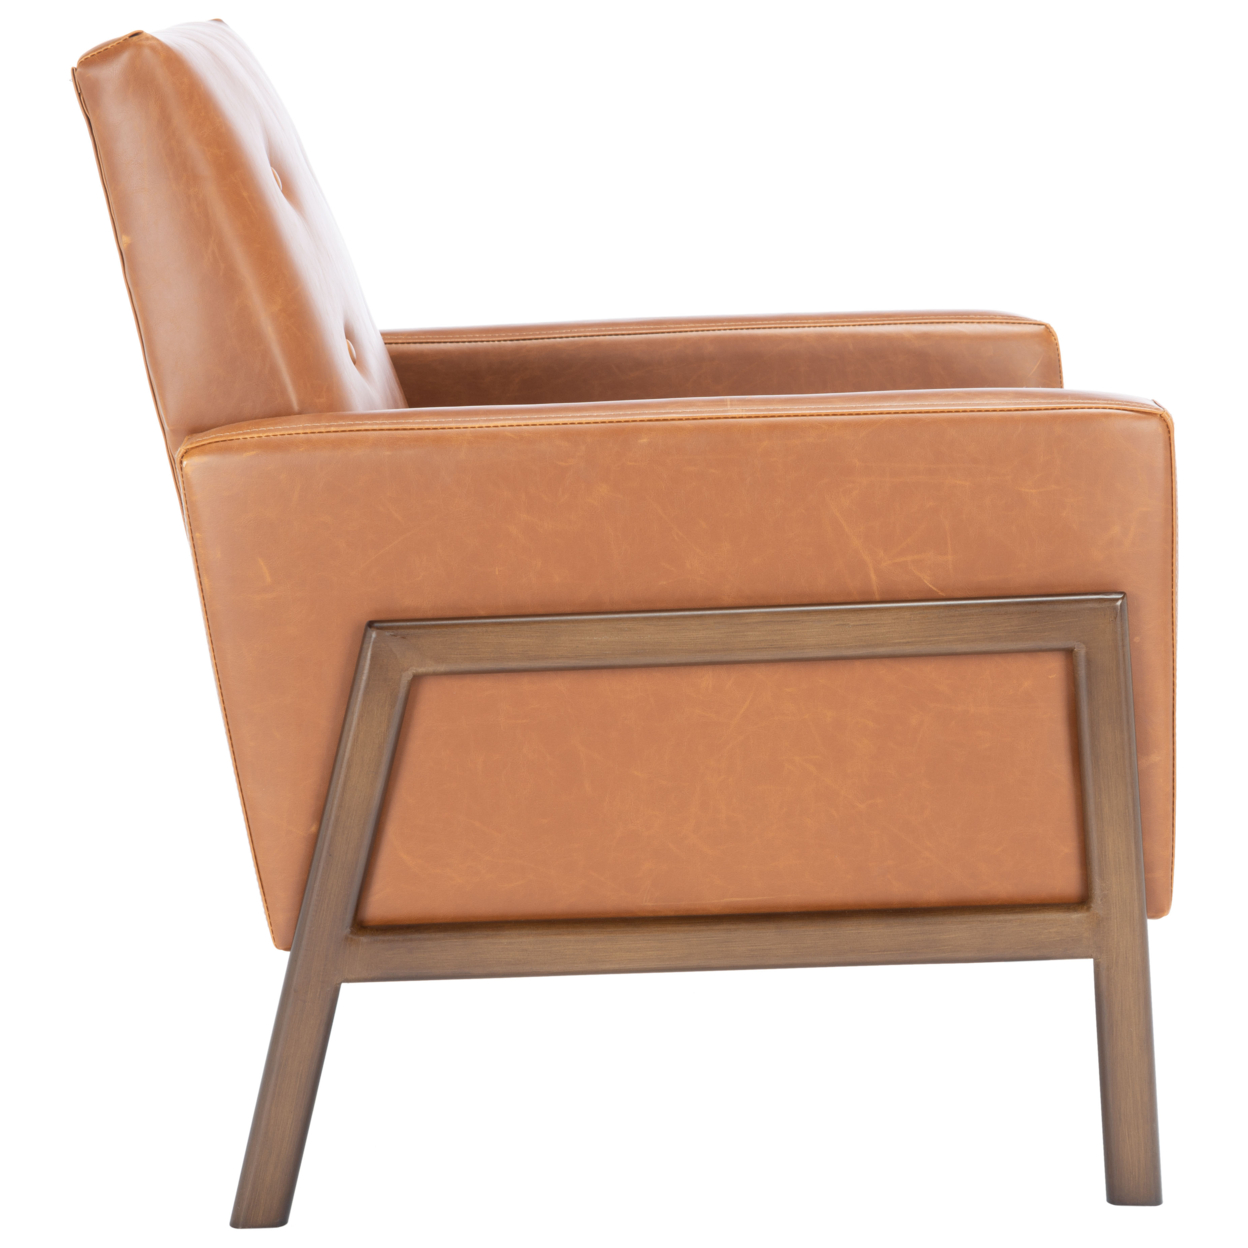 SAFAVIEH Roald Sofa Accent Chair Light Brown / Antique Coffee